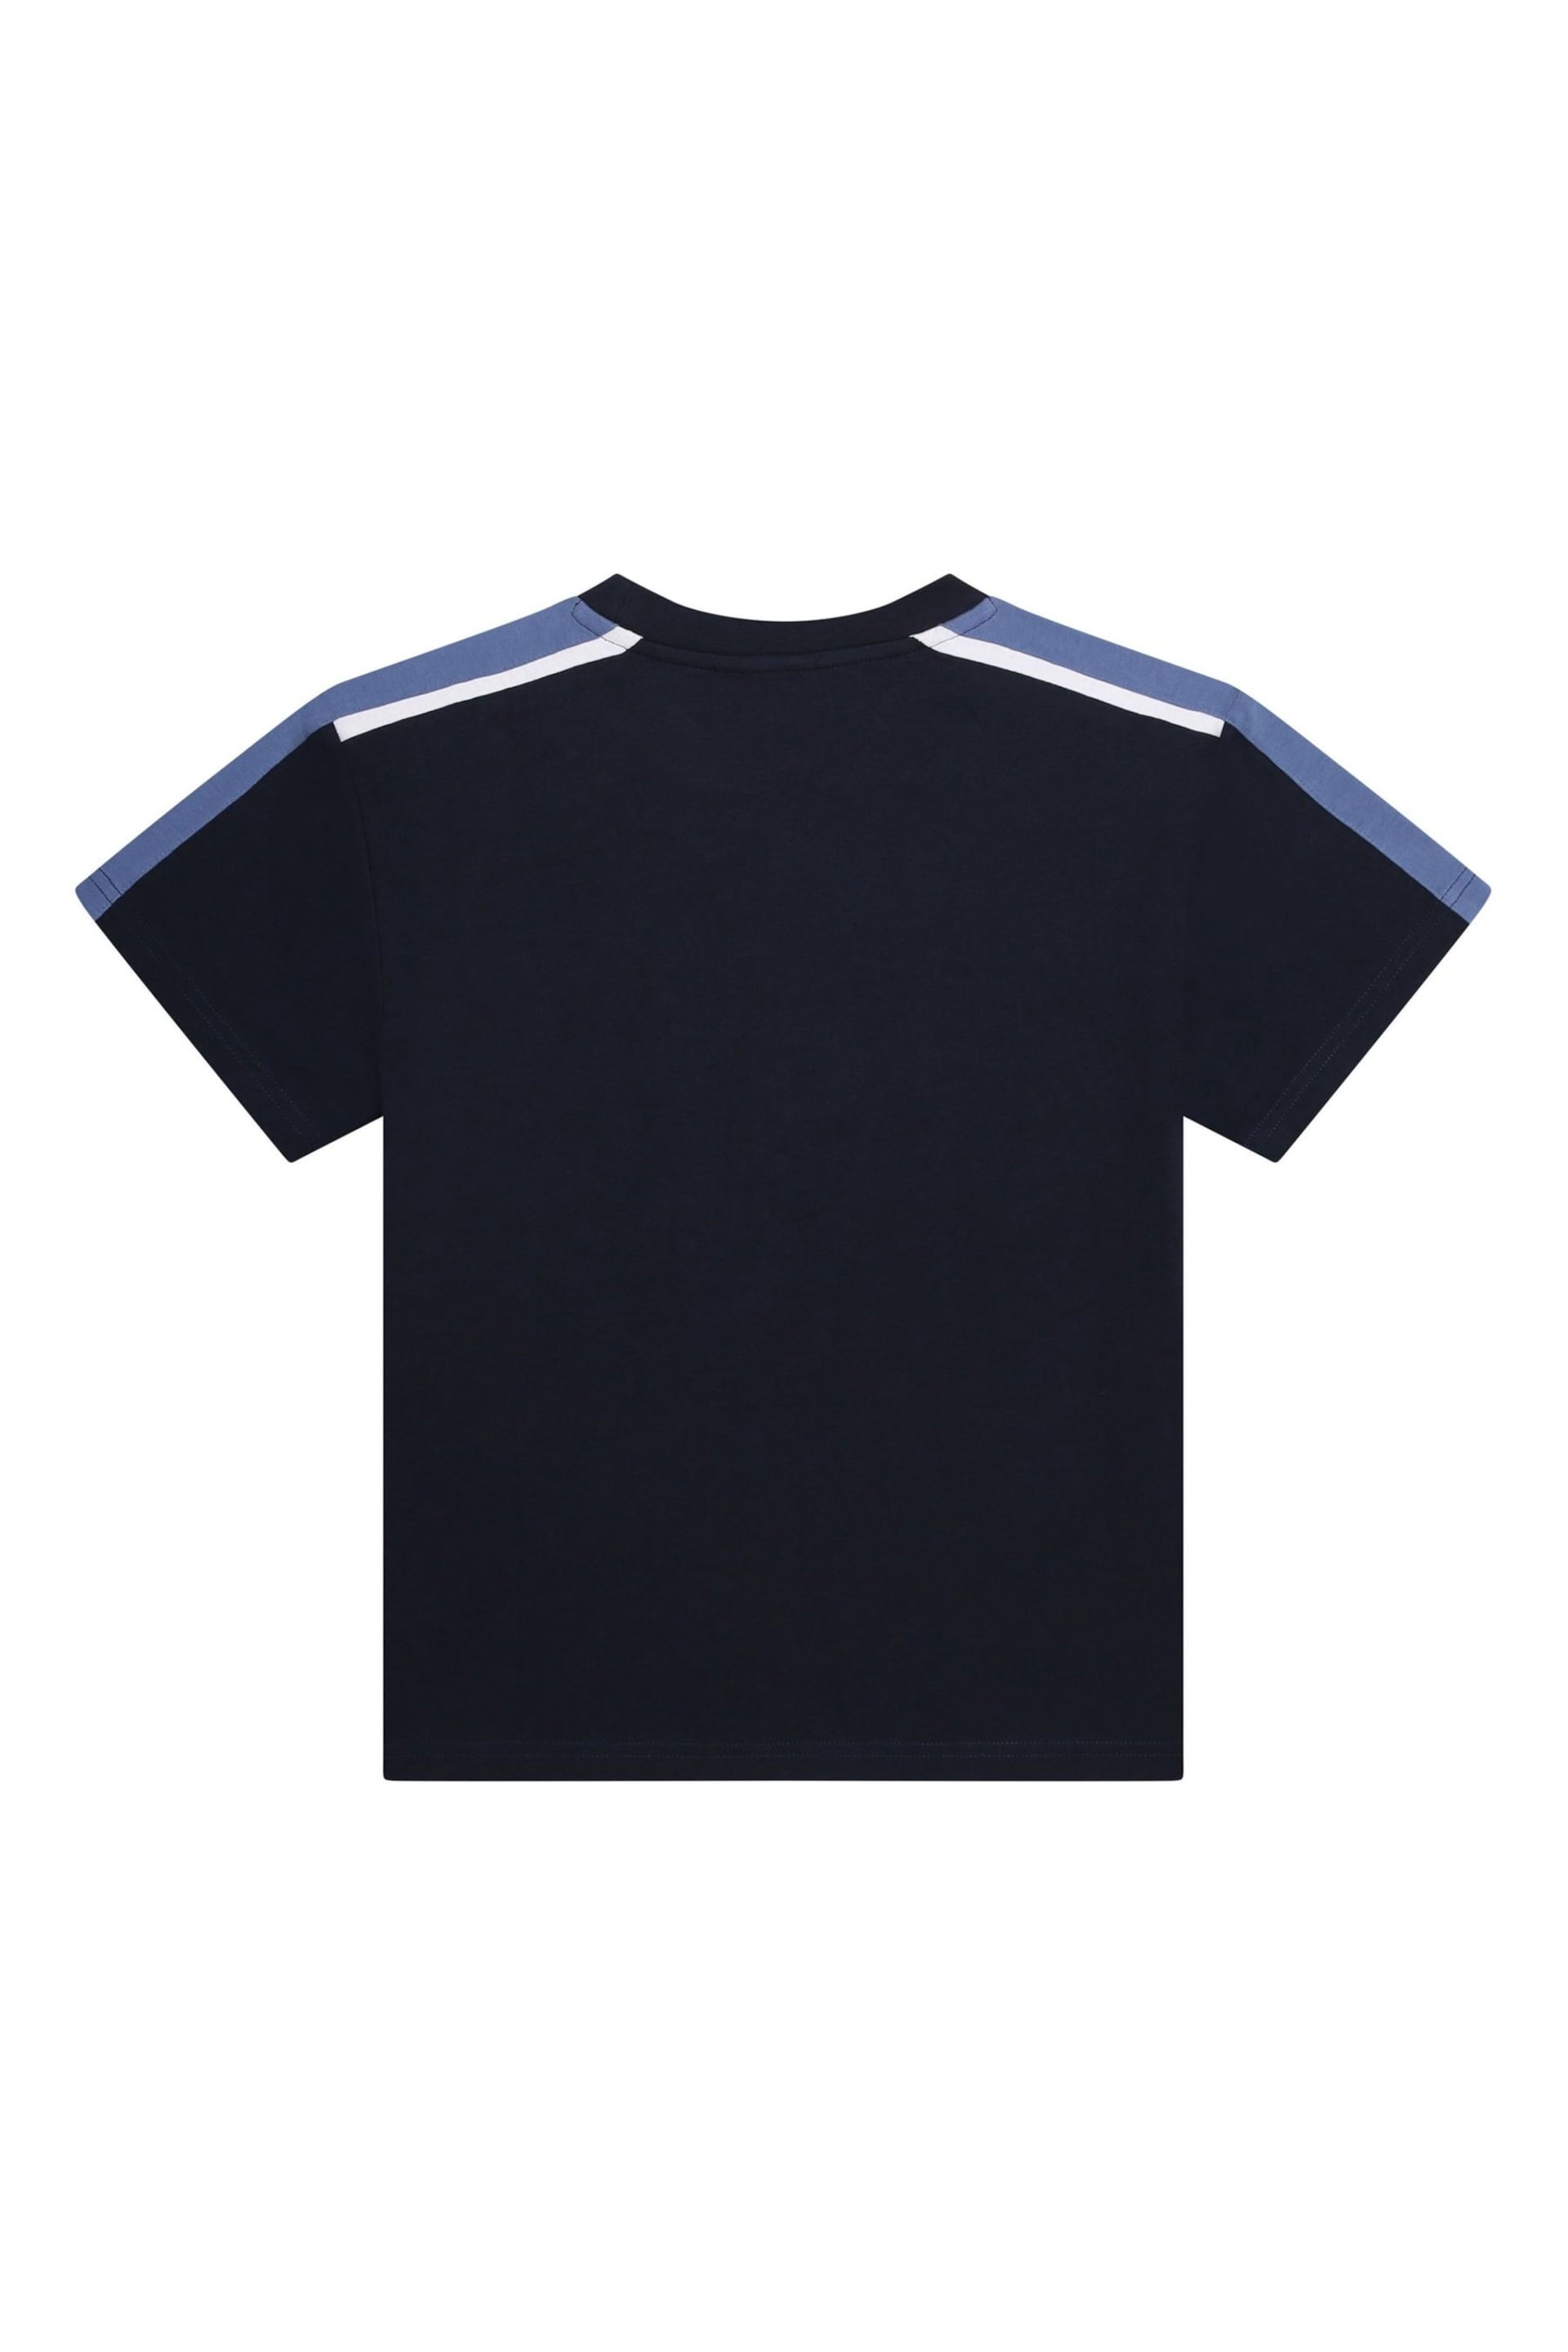 BOSS Blue Short Sleeved Colourblock Logo T-Shirt - Image 2 of 3